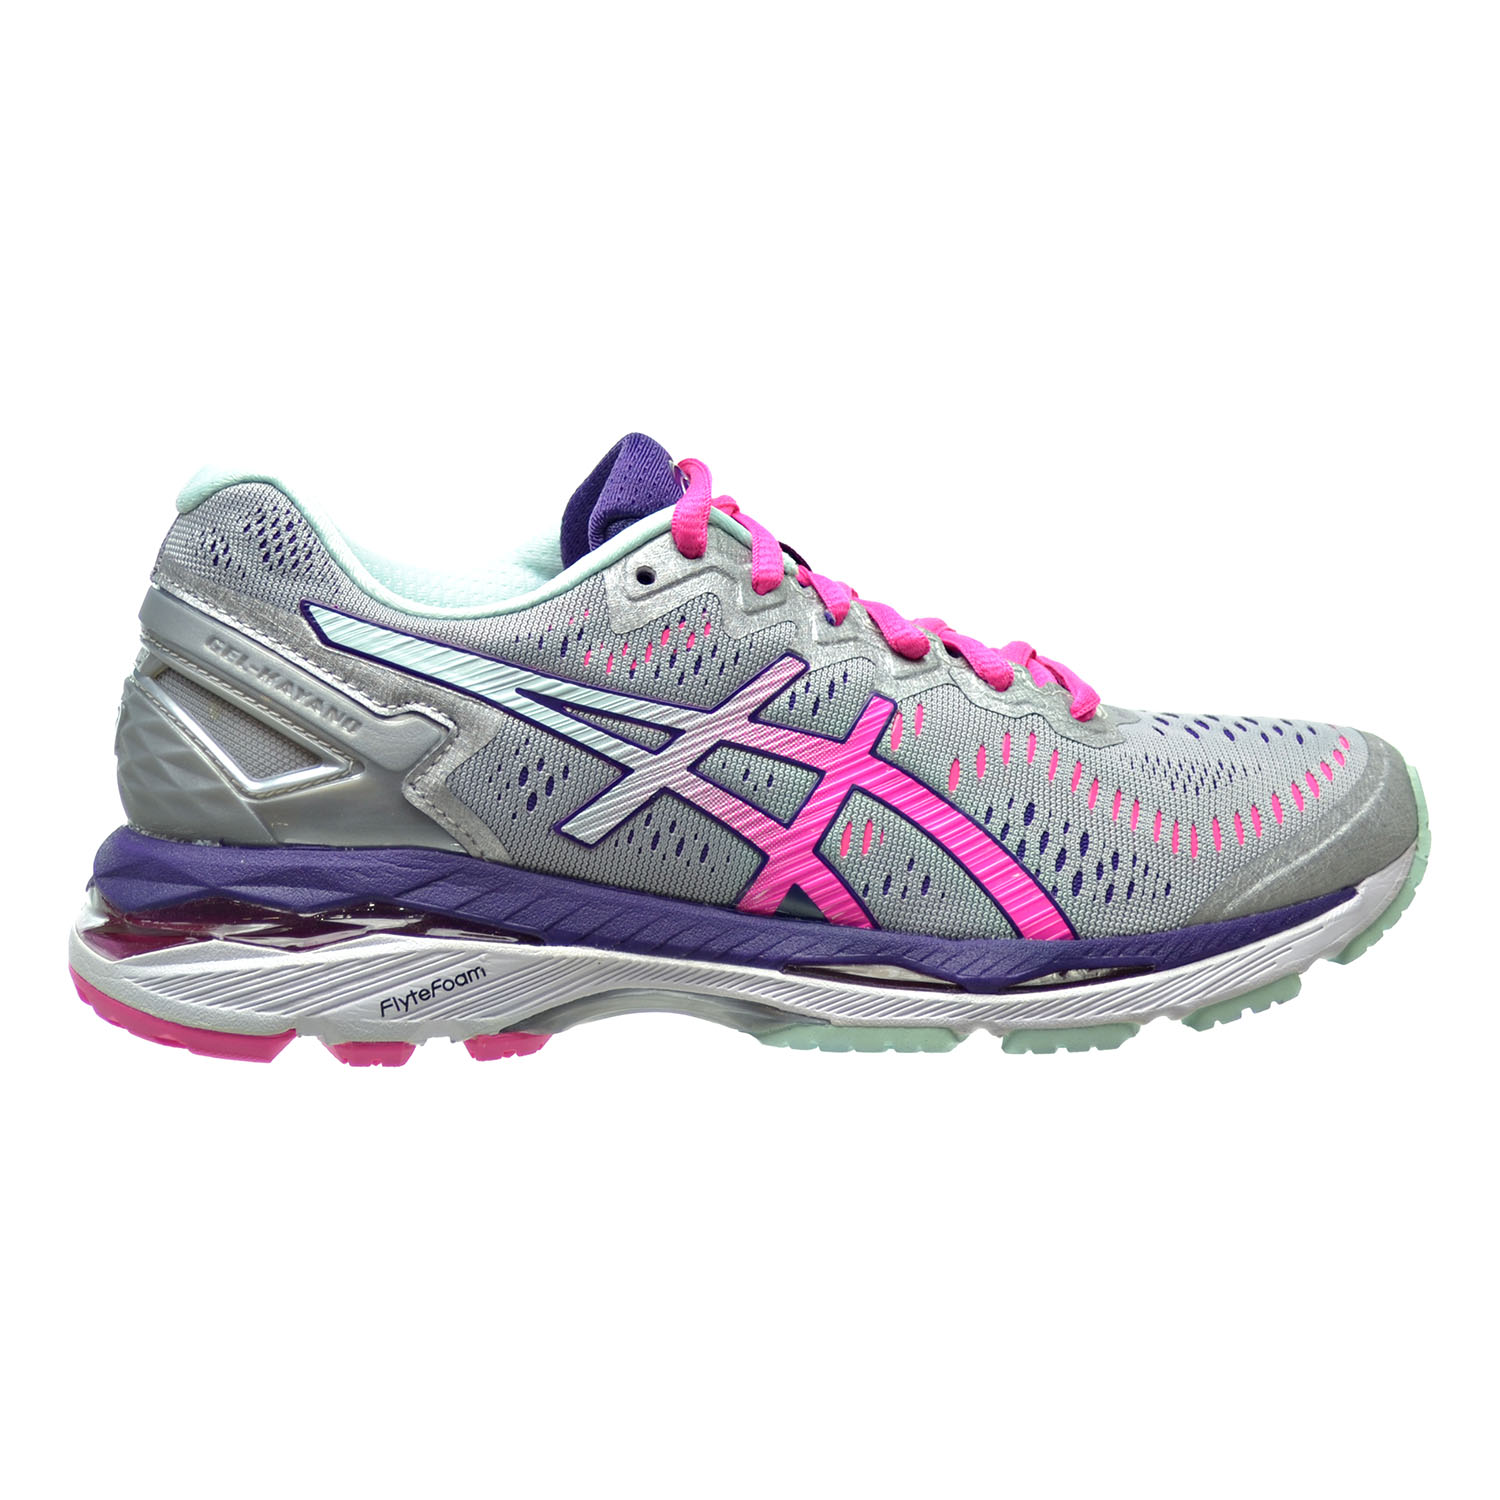 Asics Gel Kayano 23 Womens Shoes Silver Pink Glow Parachute Purple T696n 93 Ebay